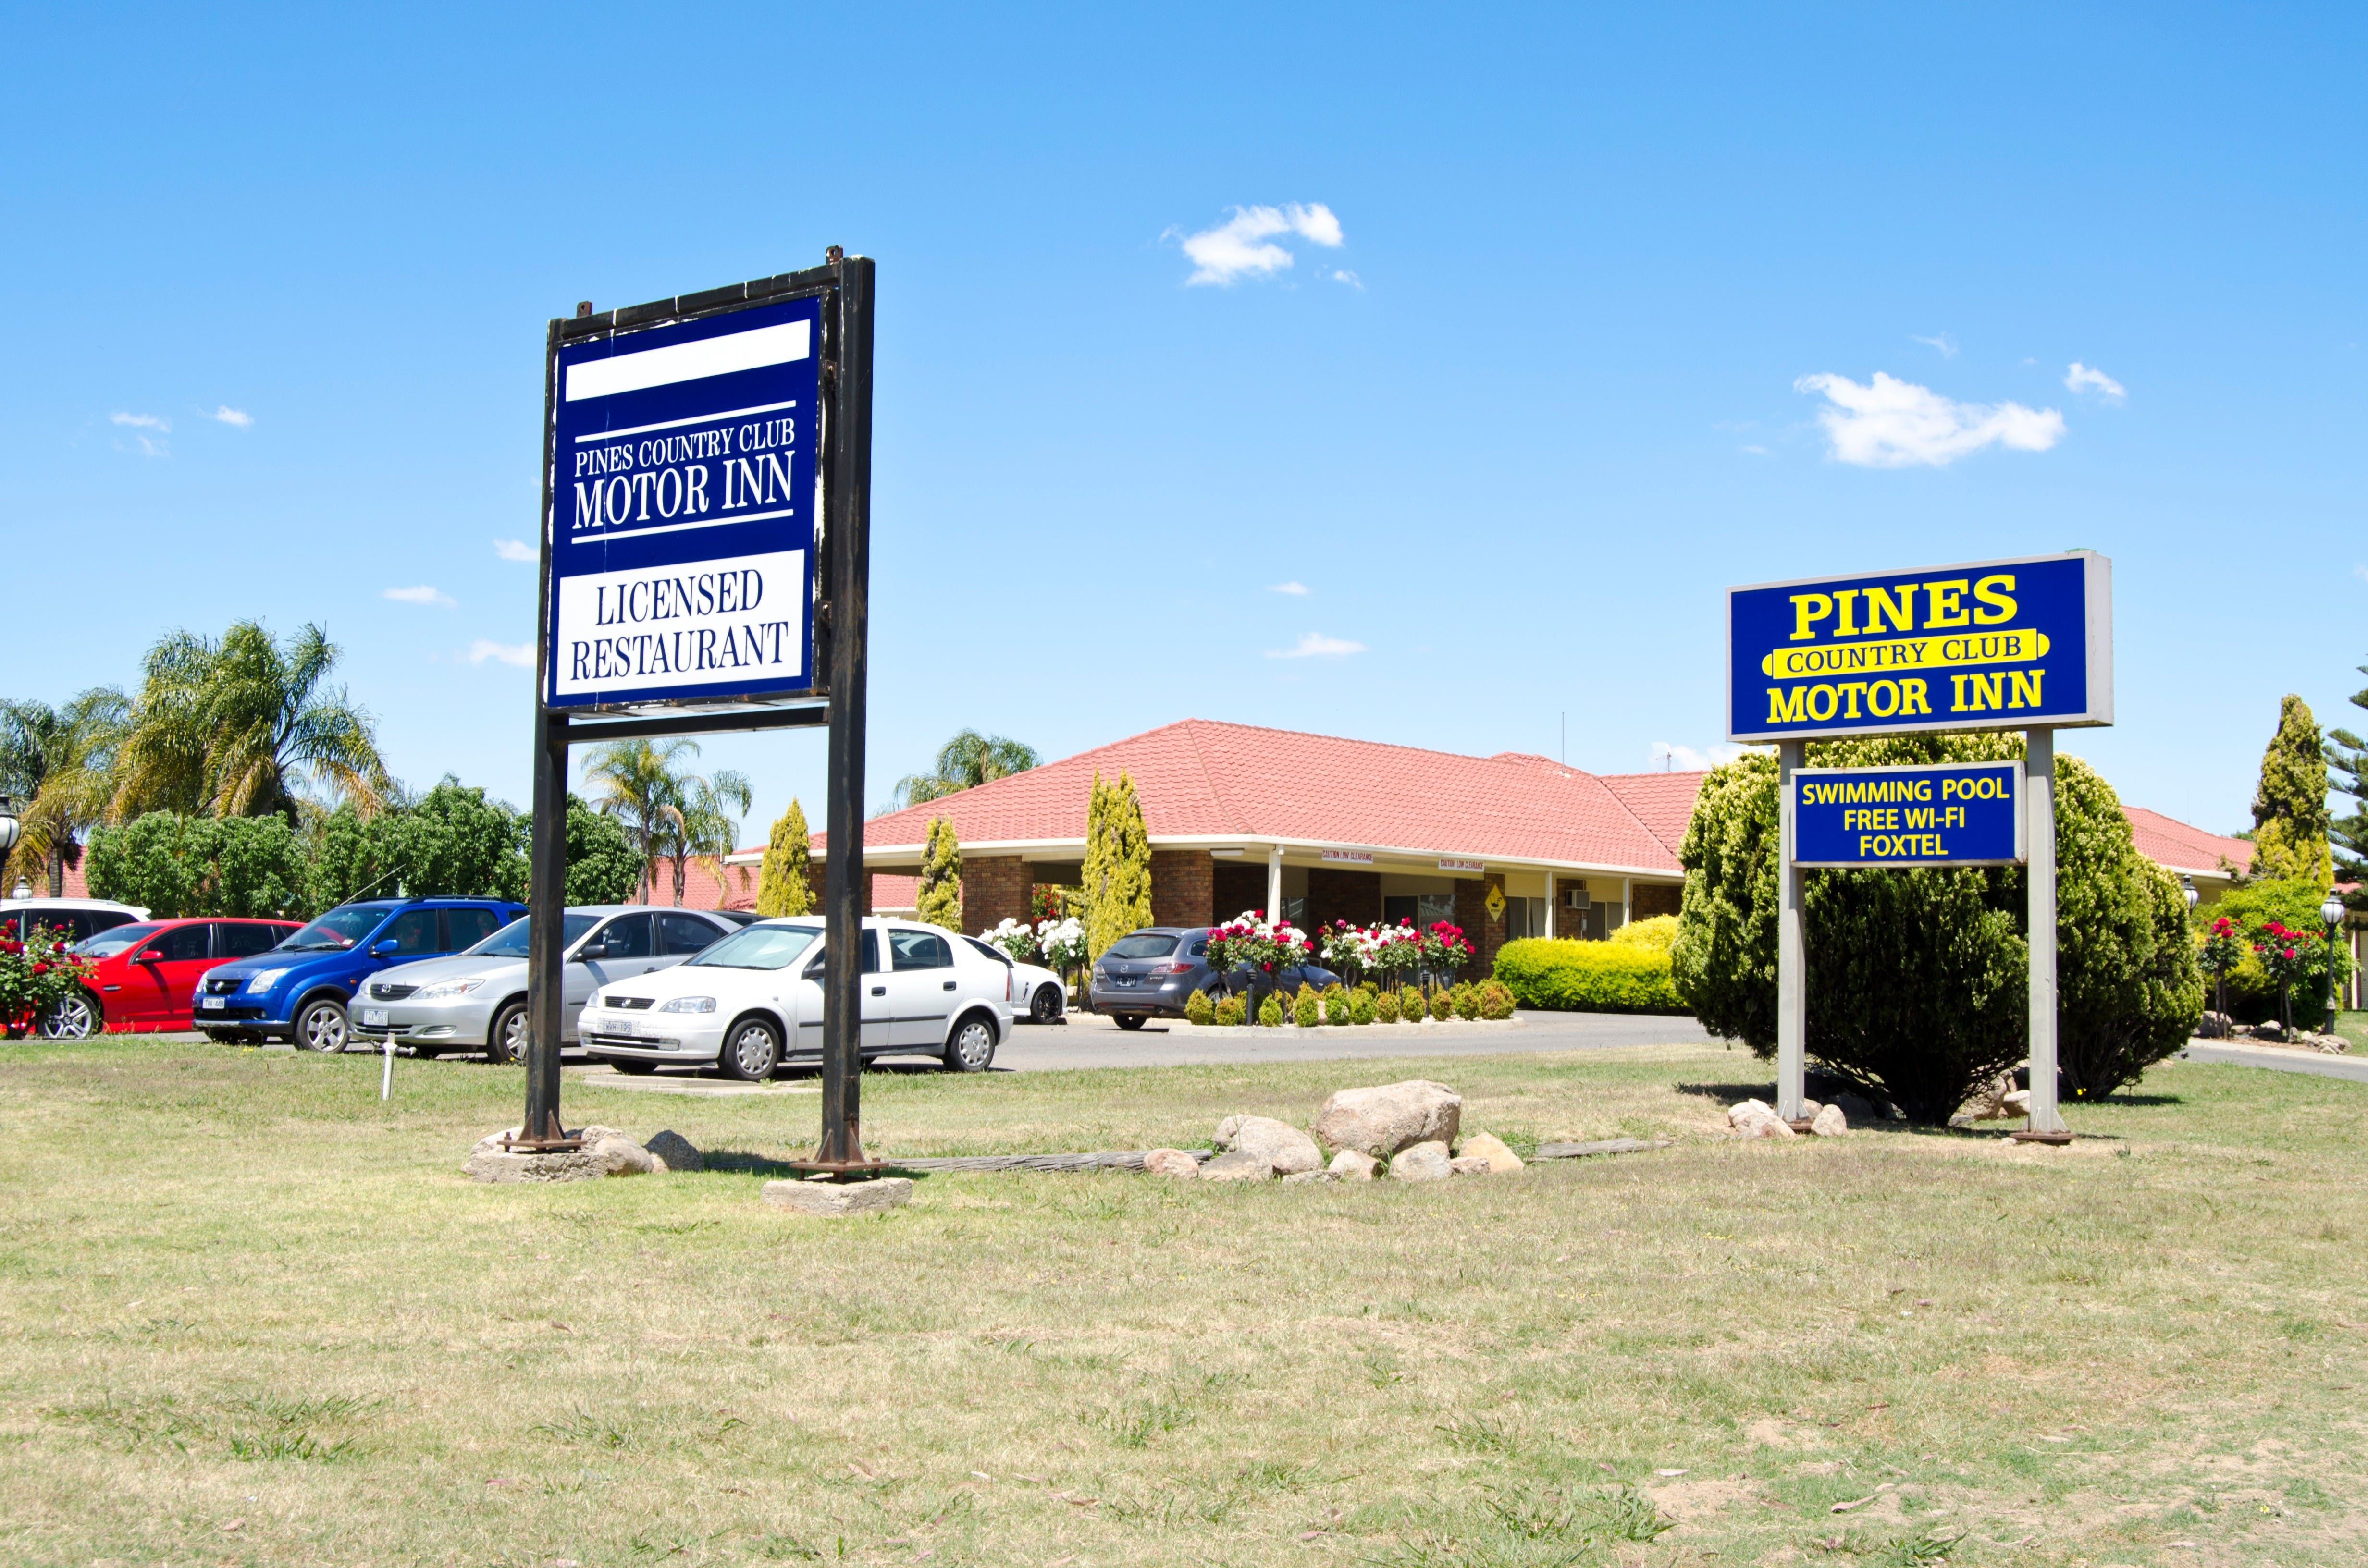 Pines Country Club Motor Inn - Tourism Brisbane